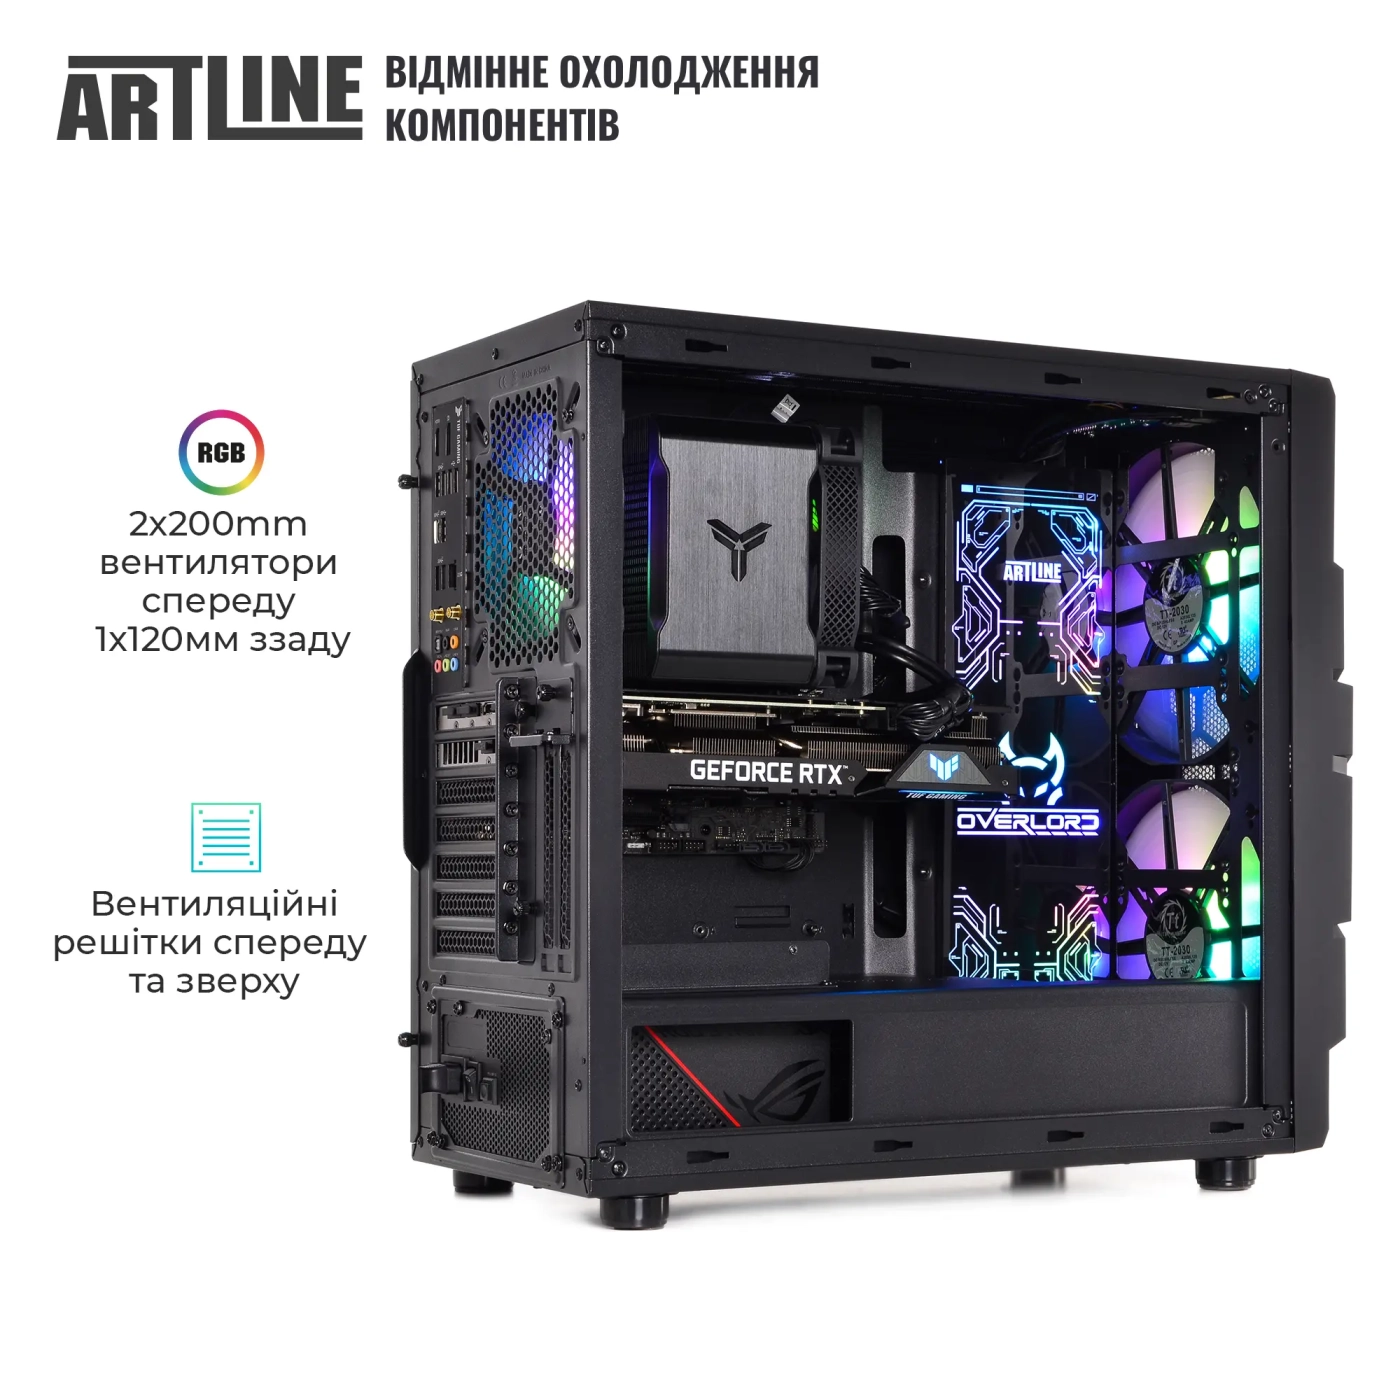 Купить Компьютер ARTLINE Overlord X65 (X65v41) - фото 4